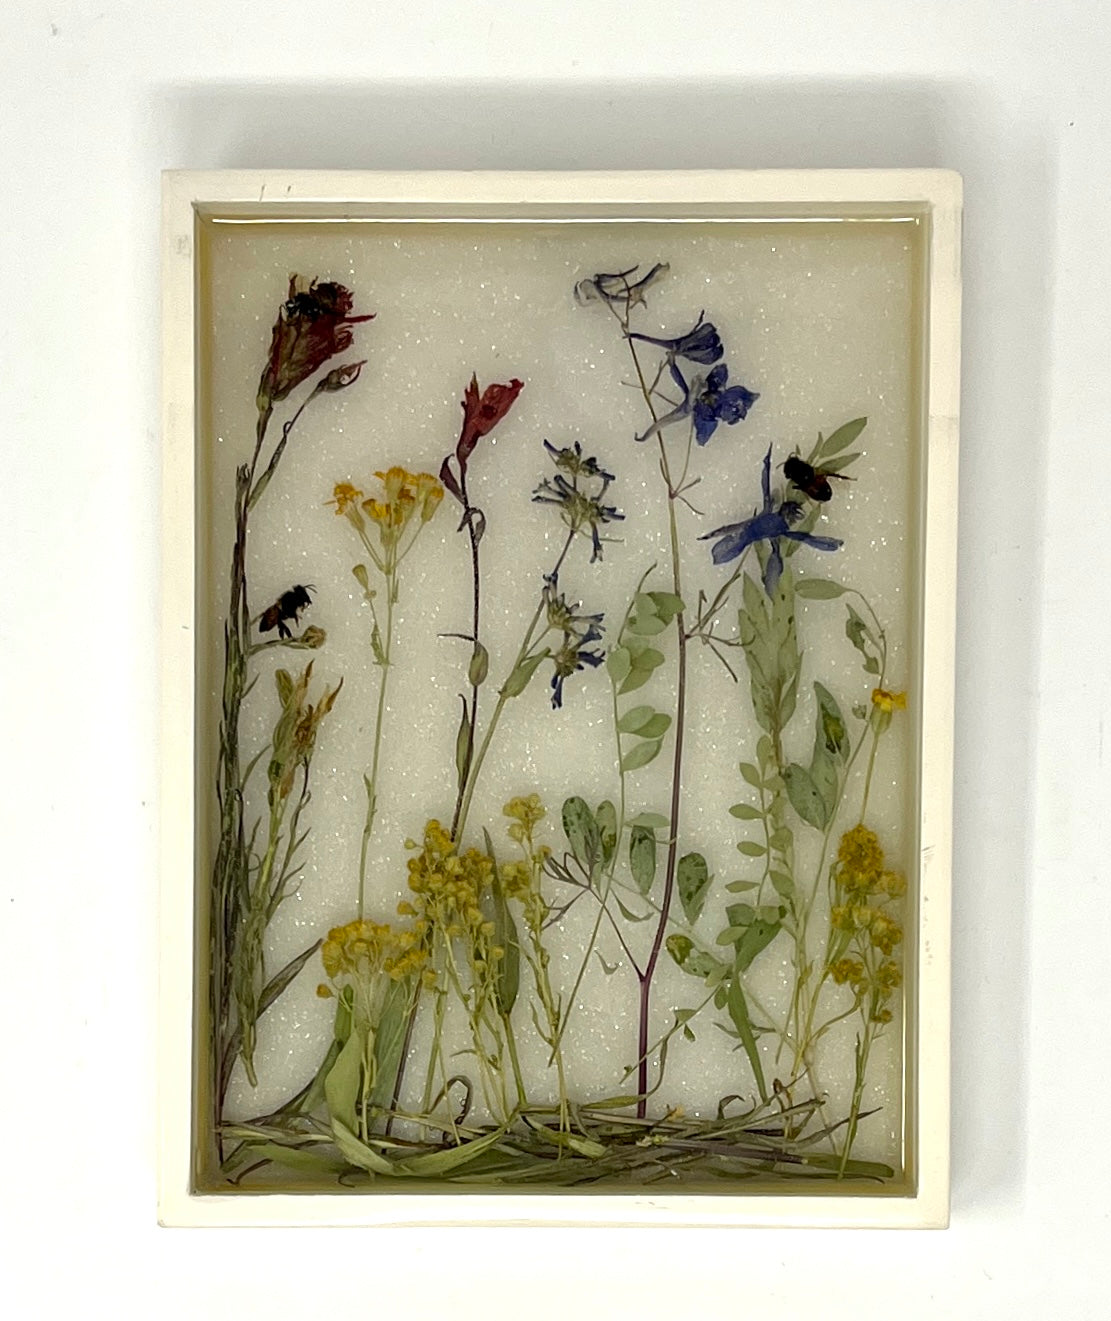 Julianna Lovasz: Small Flower Frame